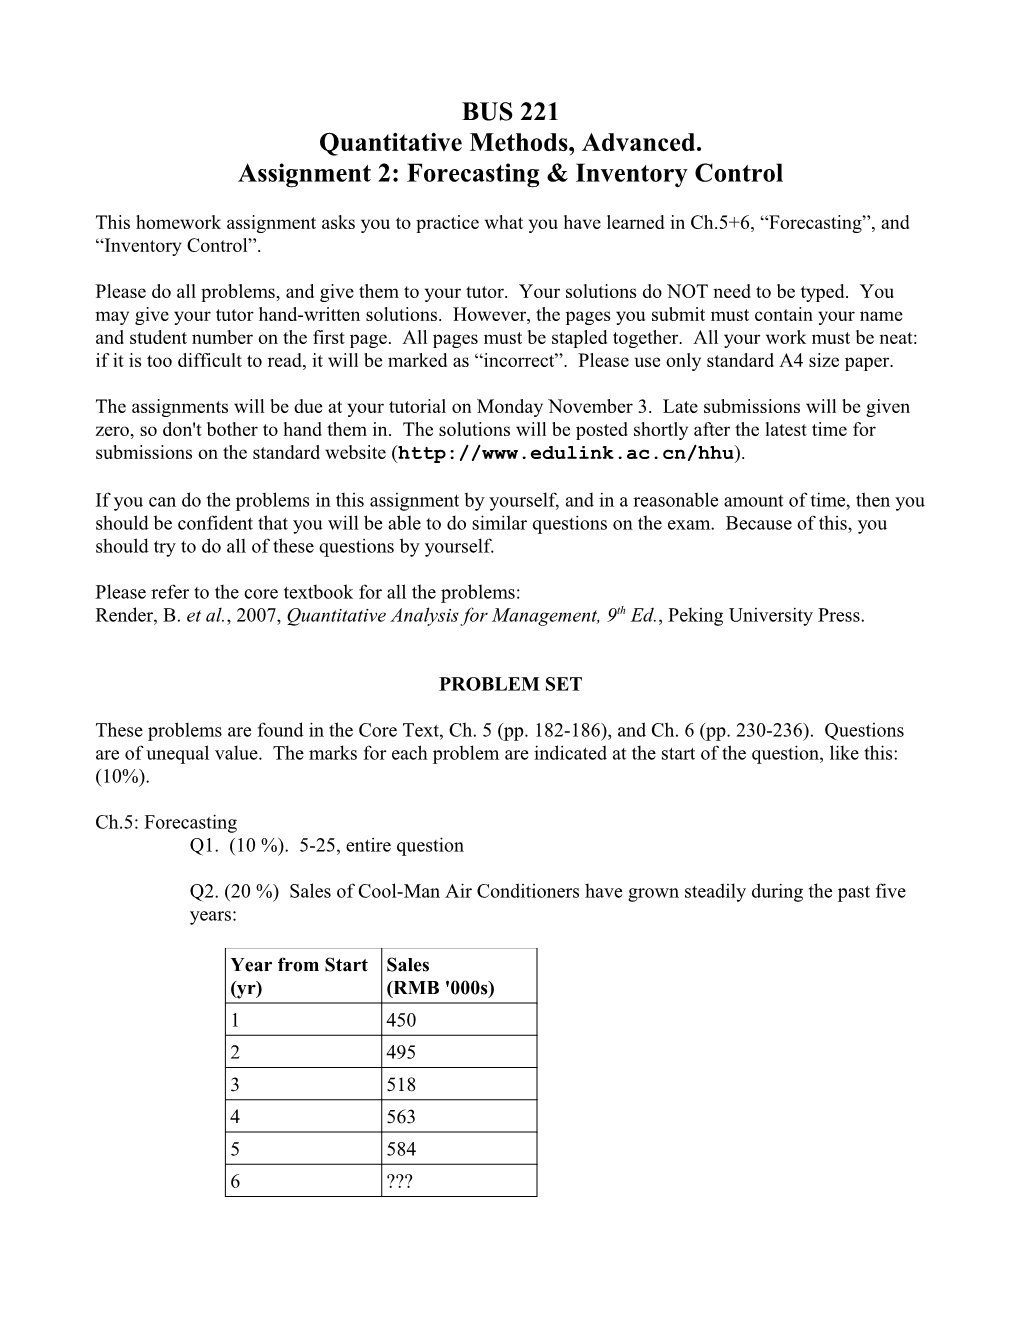 Assignment 2: Forecasting & Inventory Control